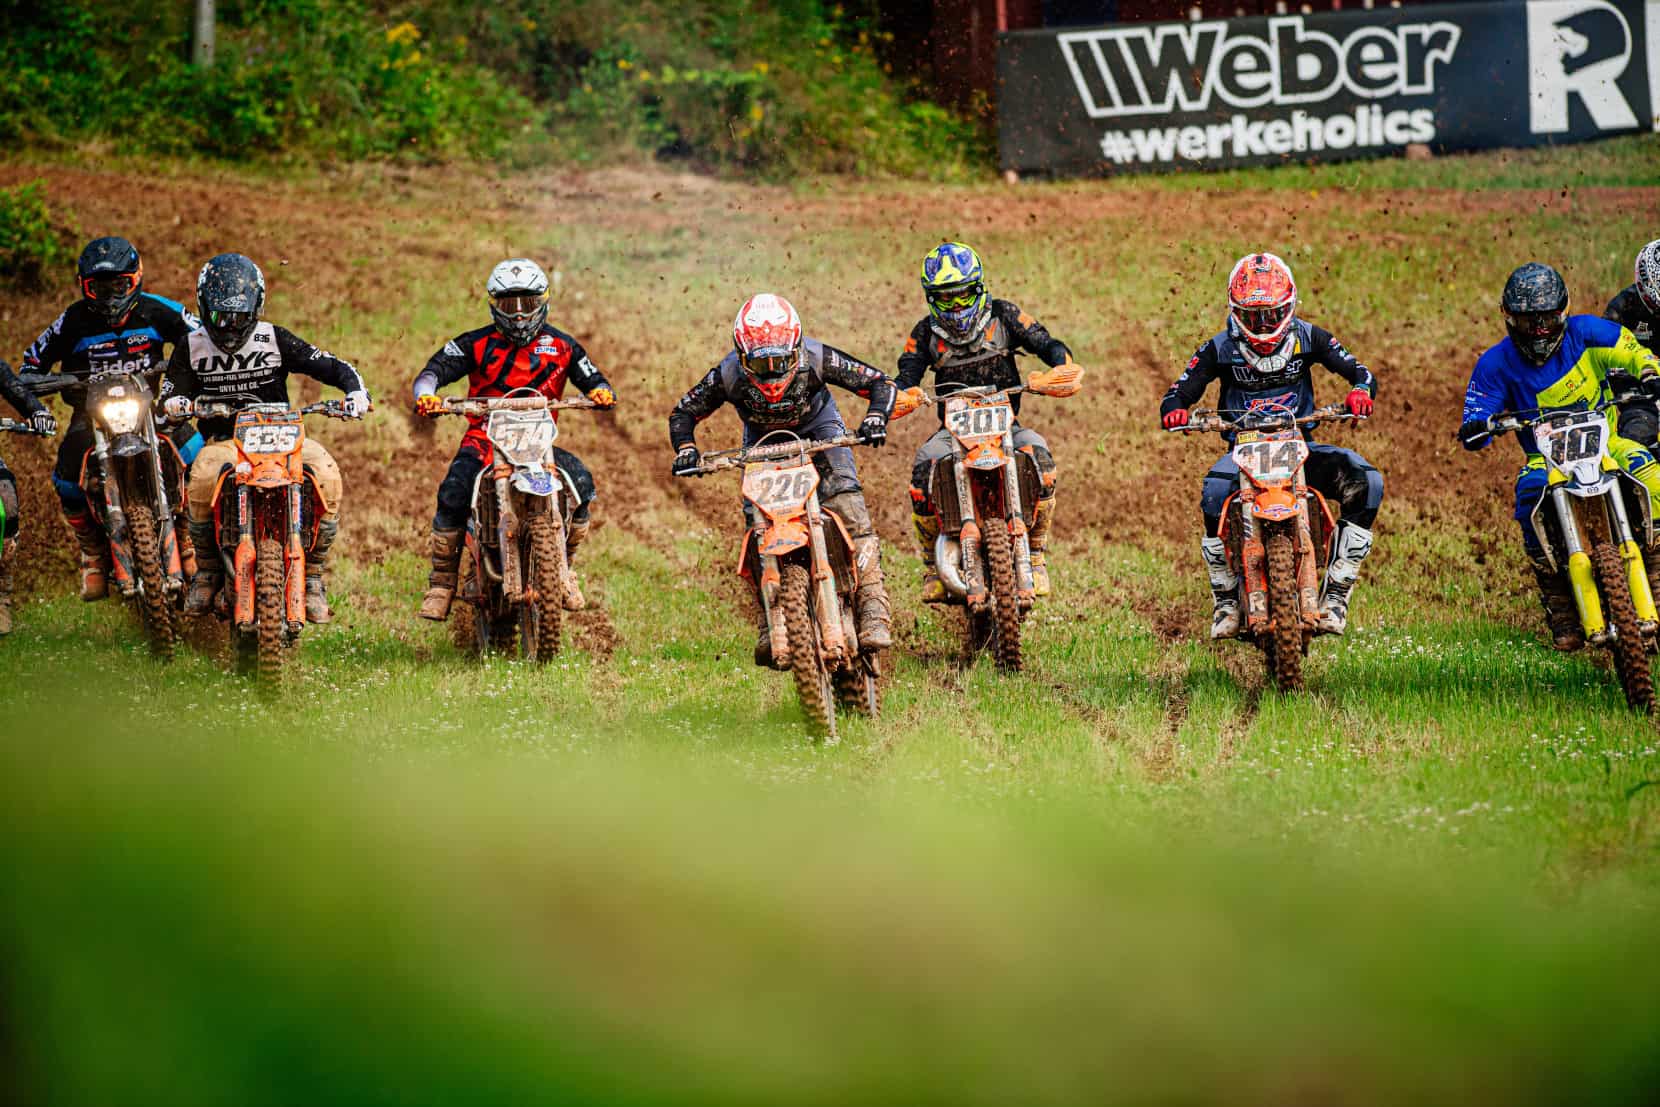 MX-Training mit Top-Stars beim „Riders Day“ in Meckbach